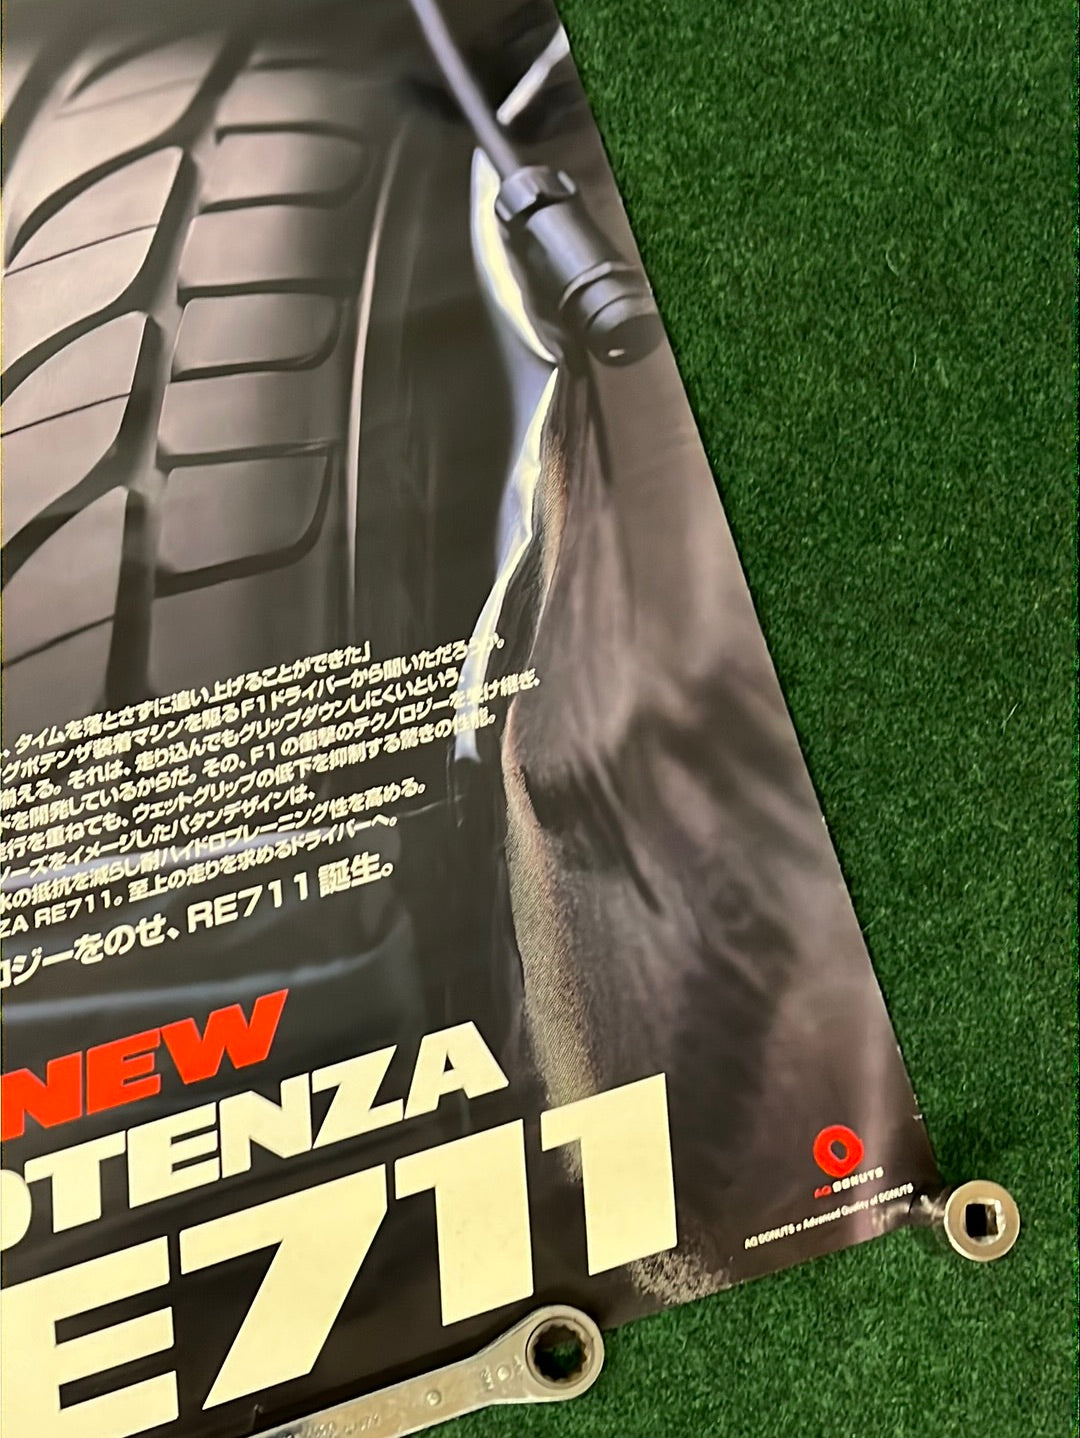 Bridgestone Potenza RE711 Tires & Formula 1 Doublesided Poster